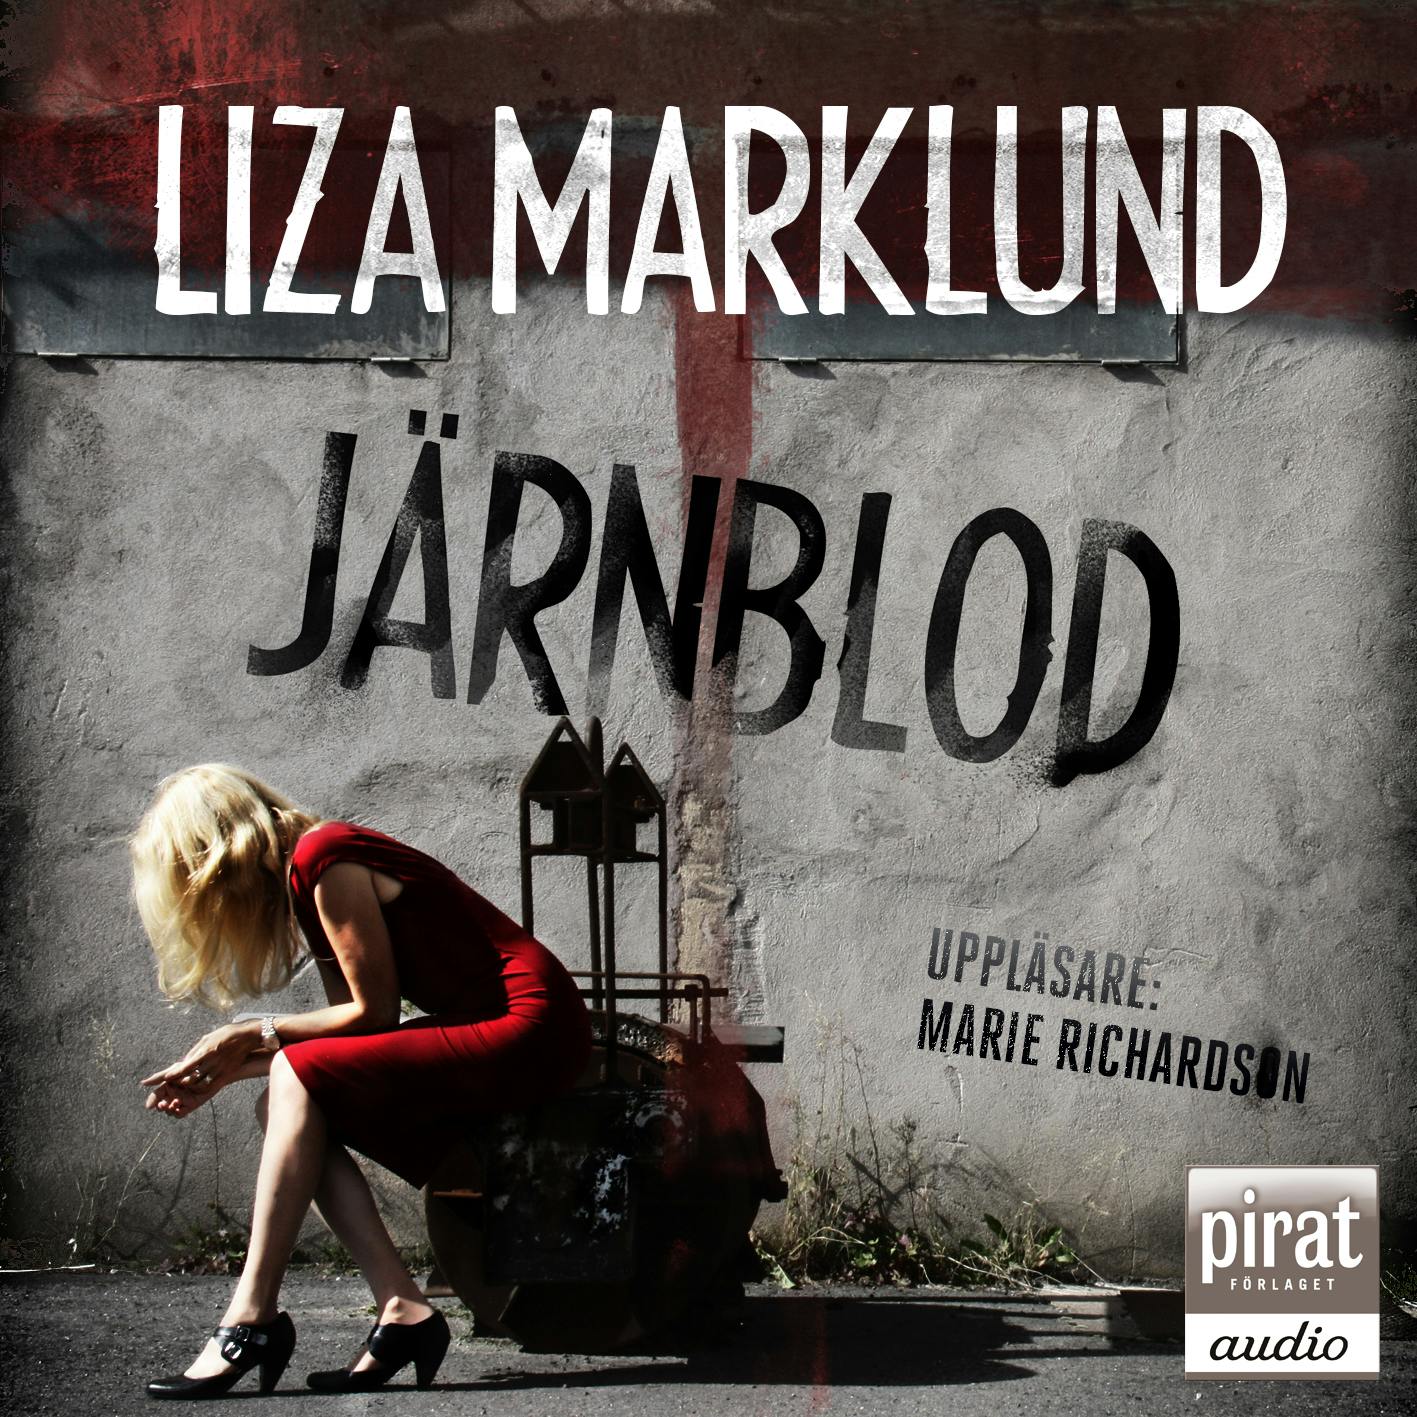 Järnblod - Liza Marklund